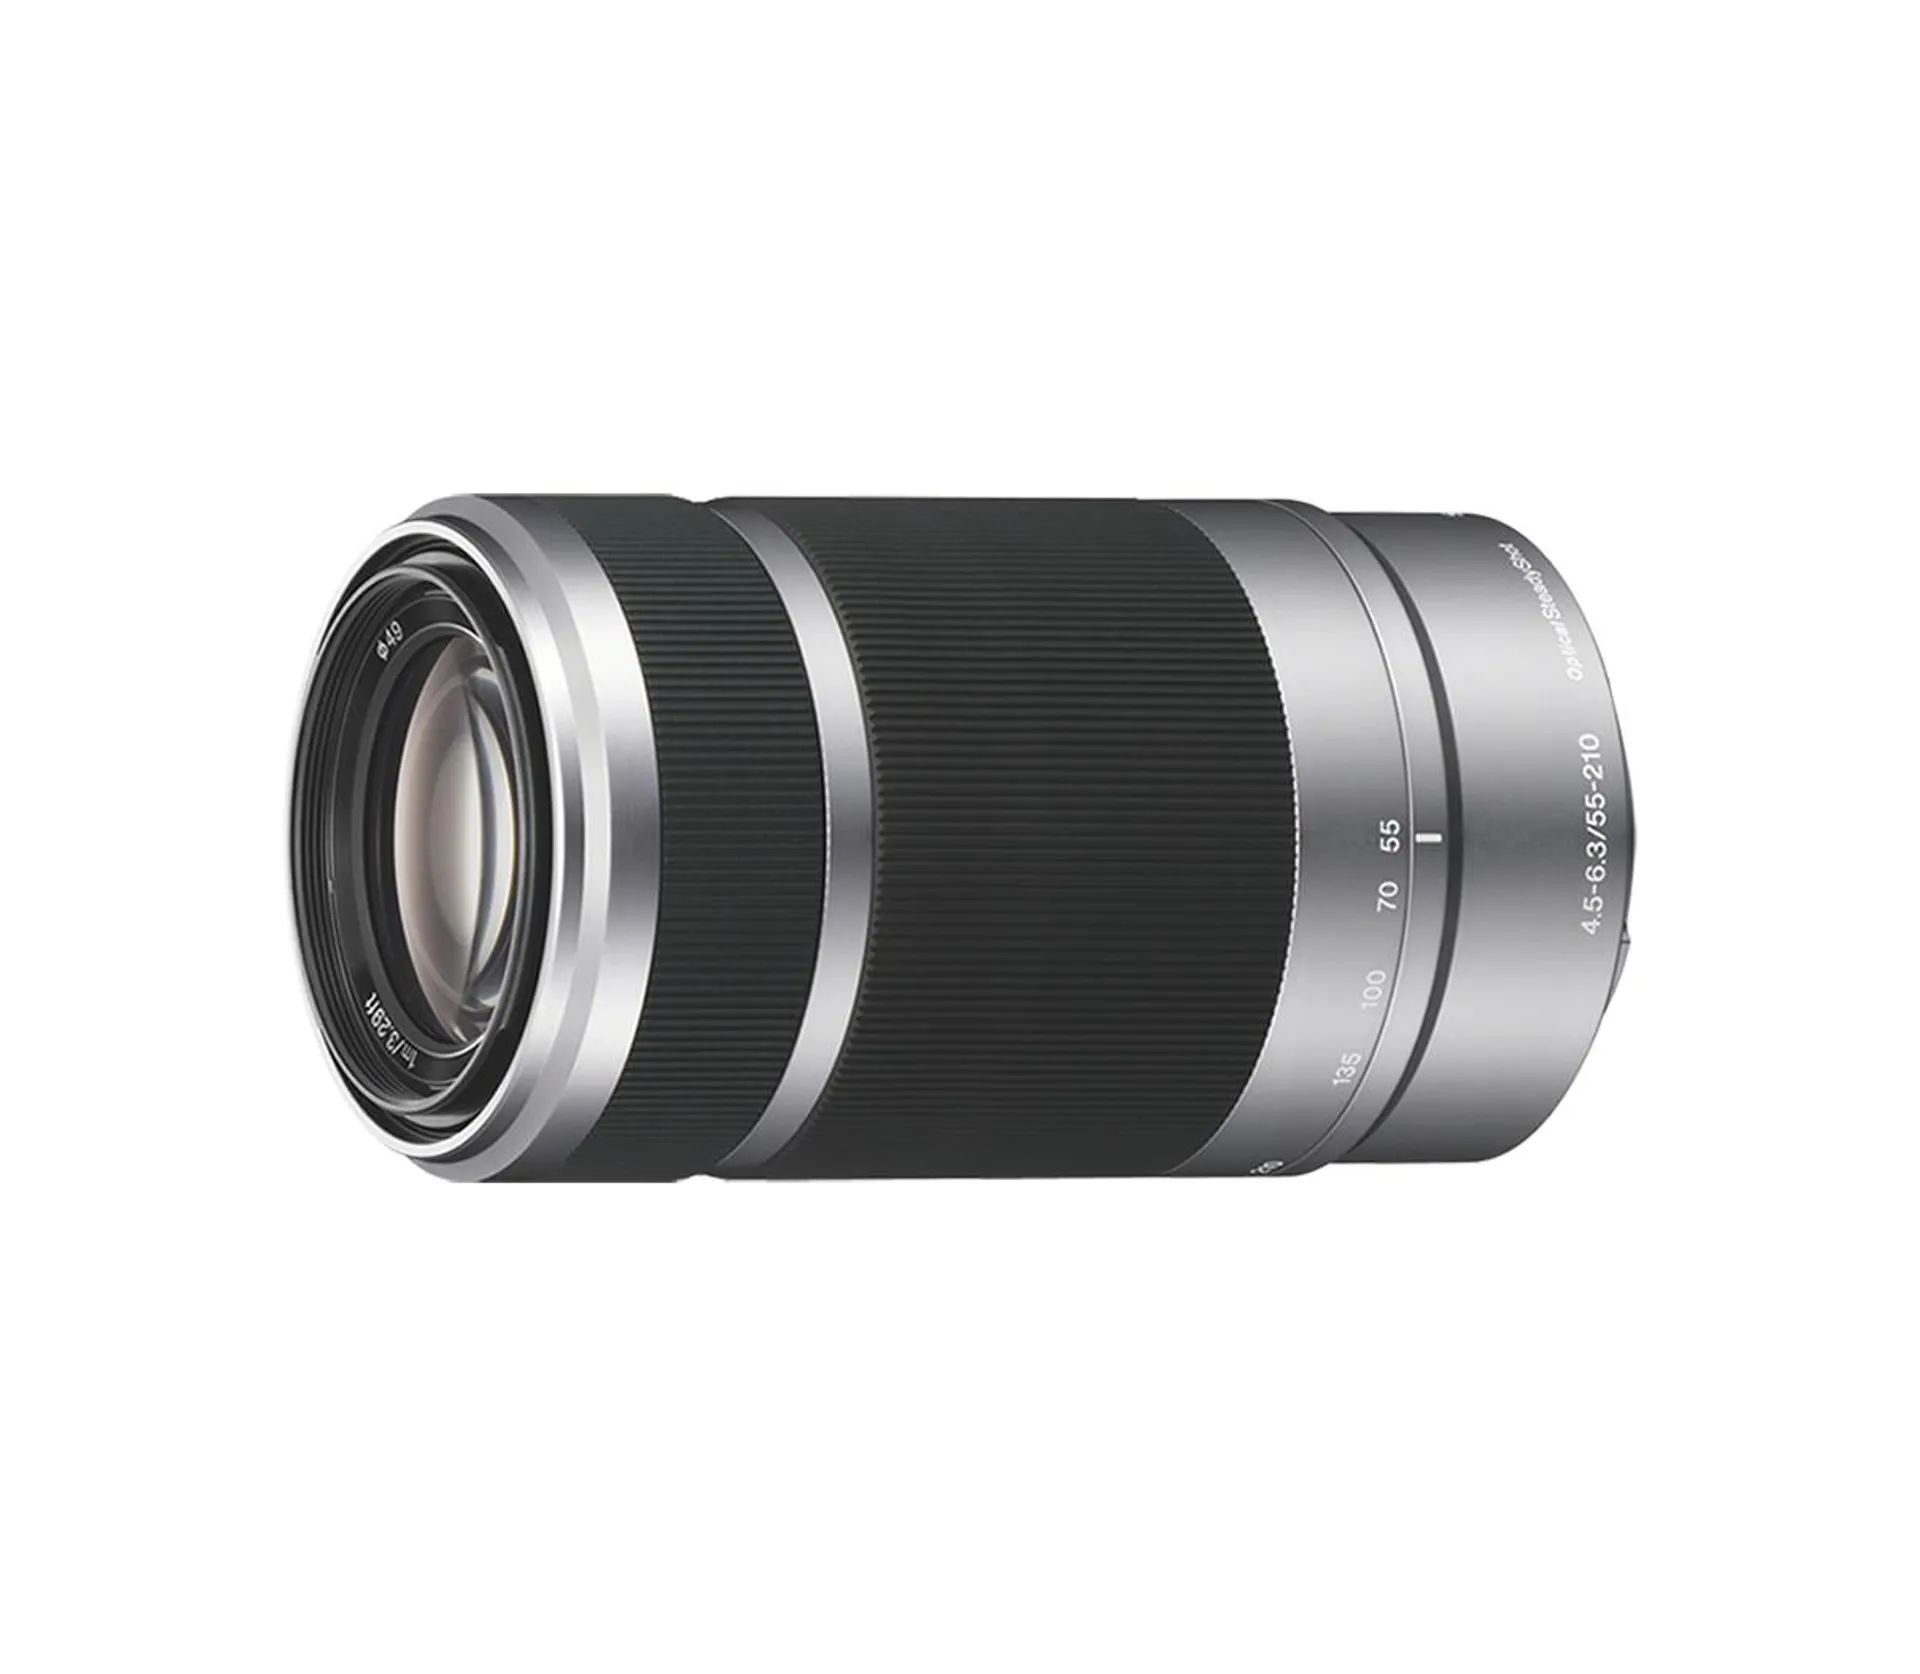 E 55–210 mm F4.5-6.3 OSS APS-C Telephoto Zoom Lens with Optical SteadyShot